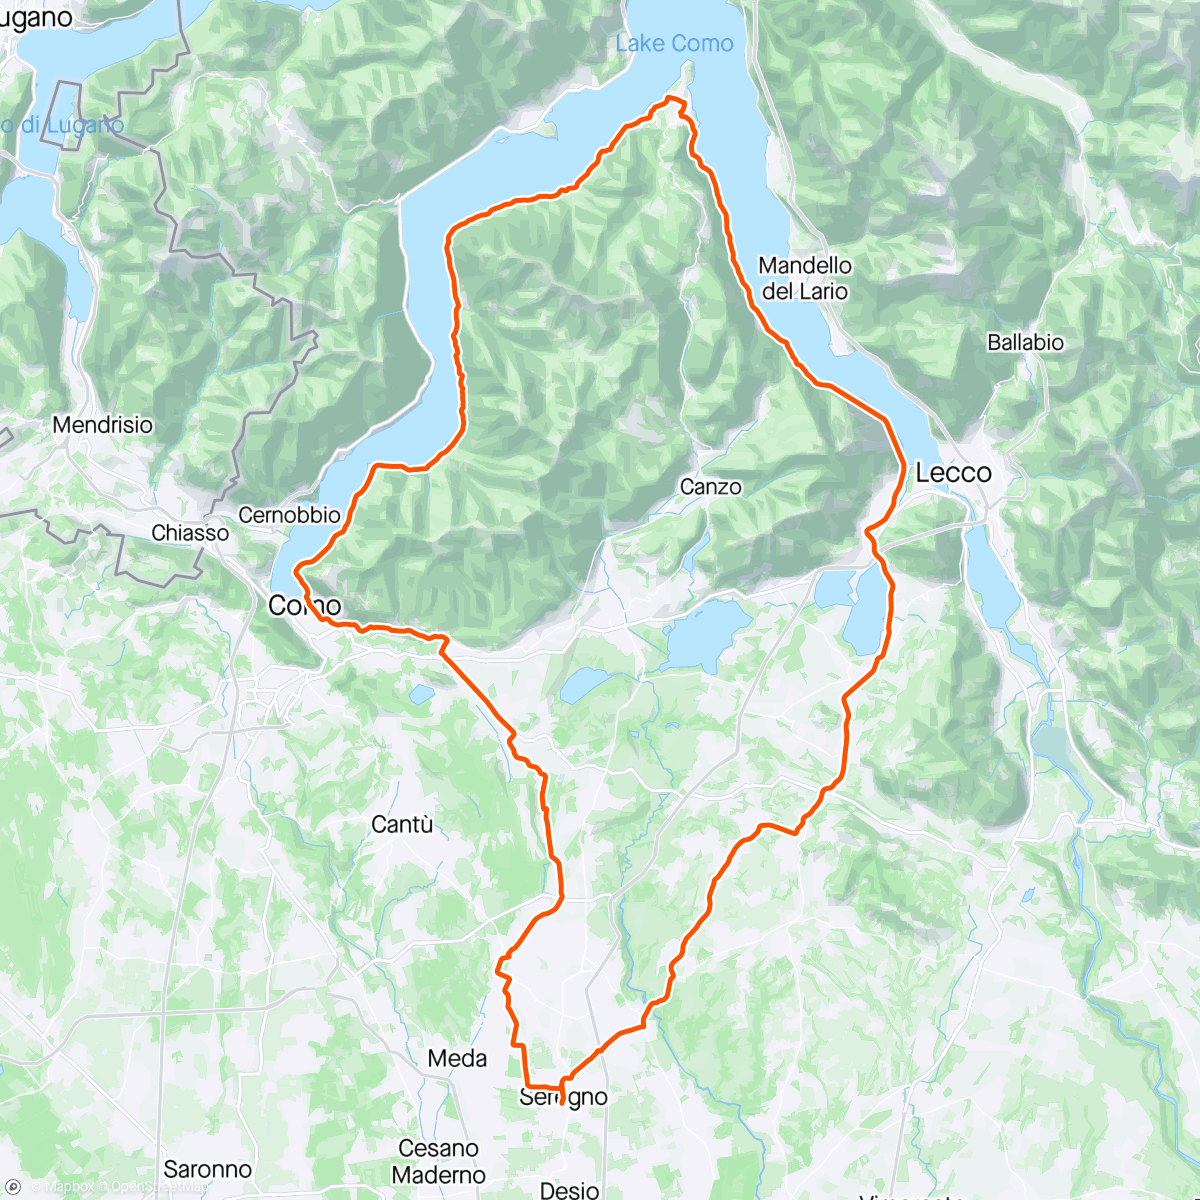 Map of the activity, Giro lago